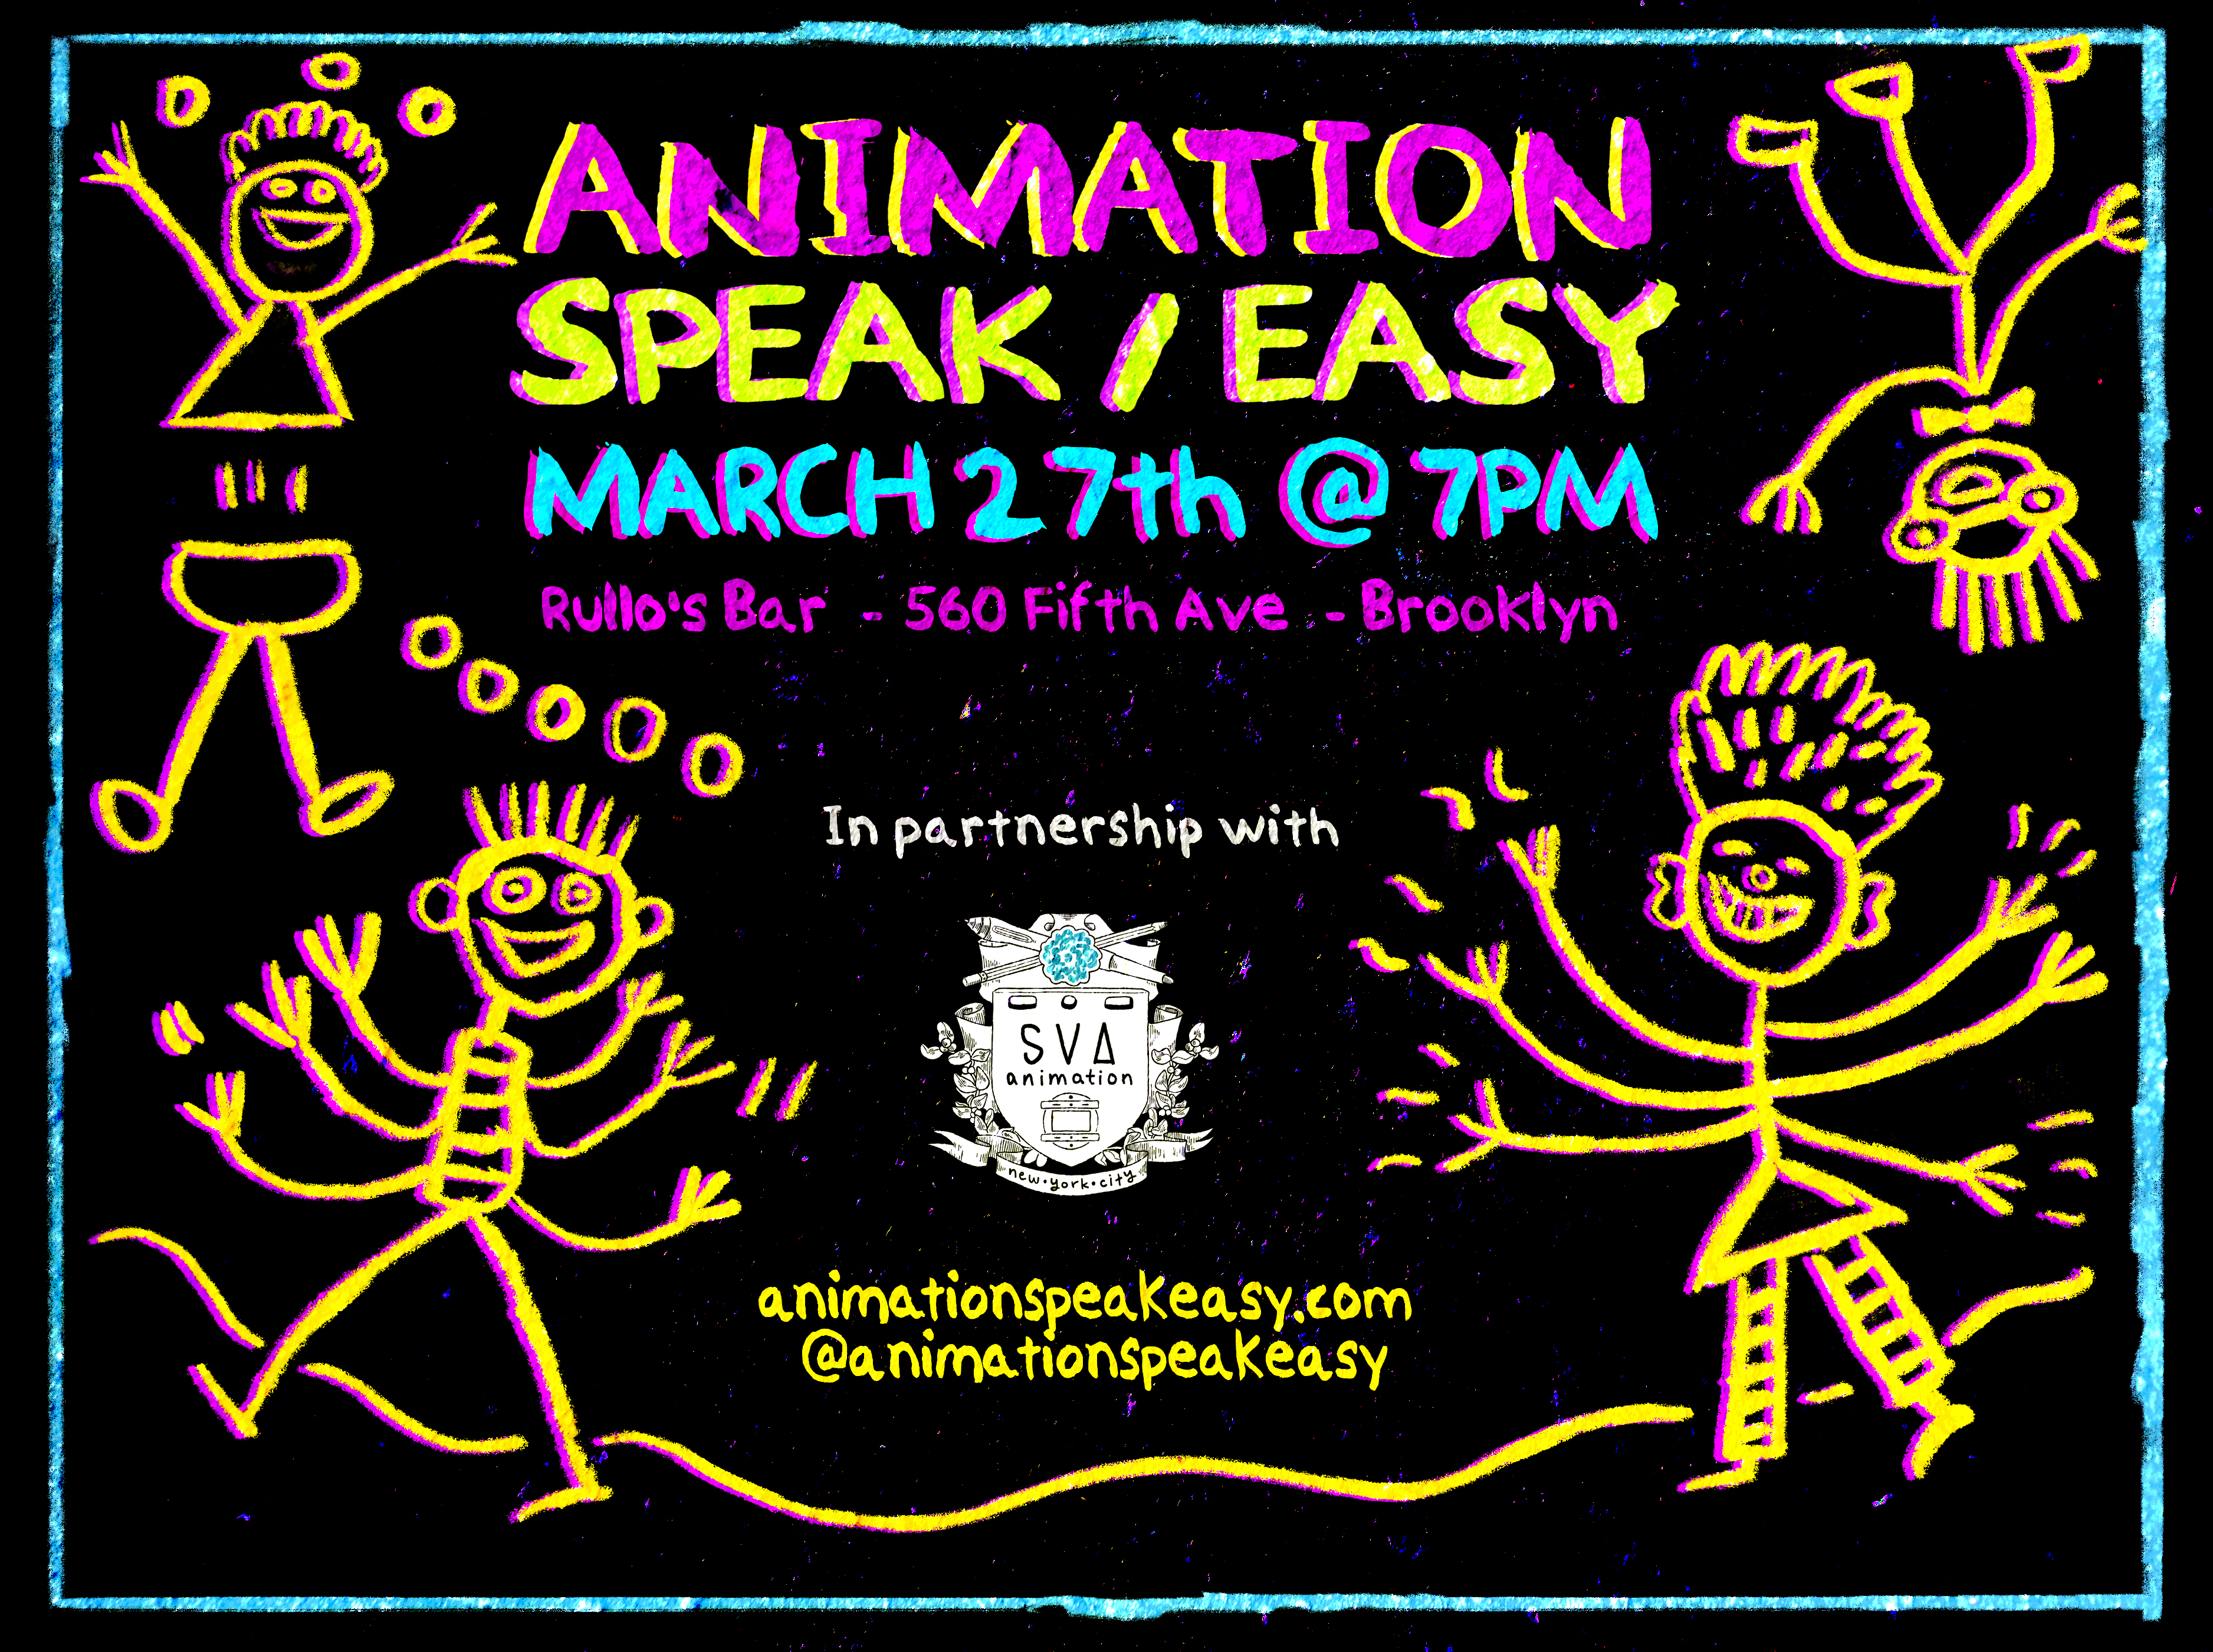 Animation Speak/Easy Vol 9